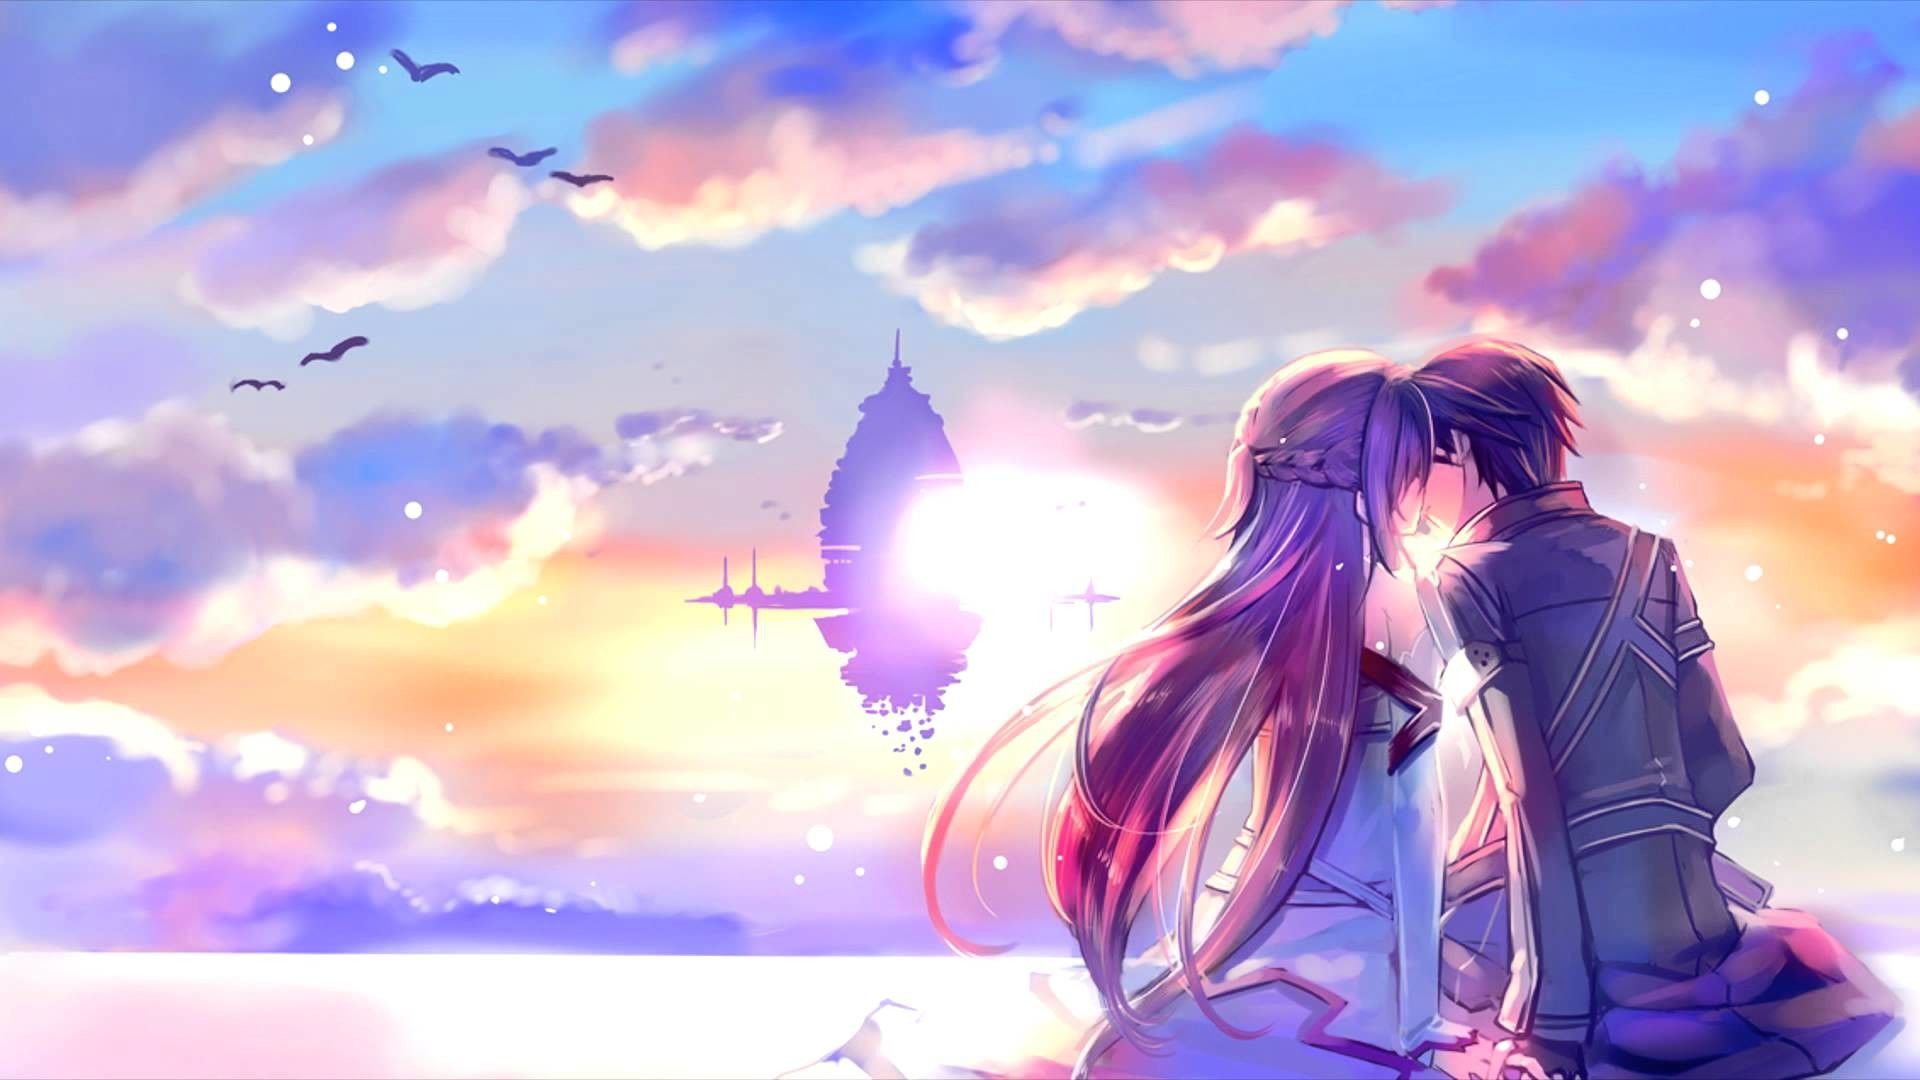 Wallpaper Anime Romantis - KibrisPDR